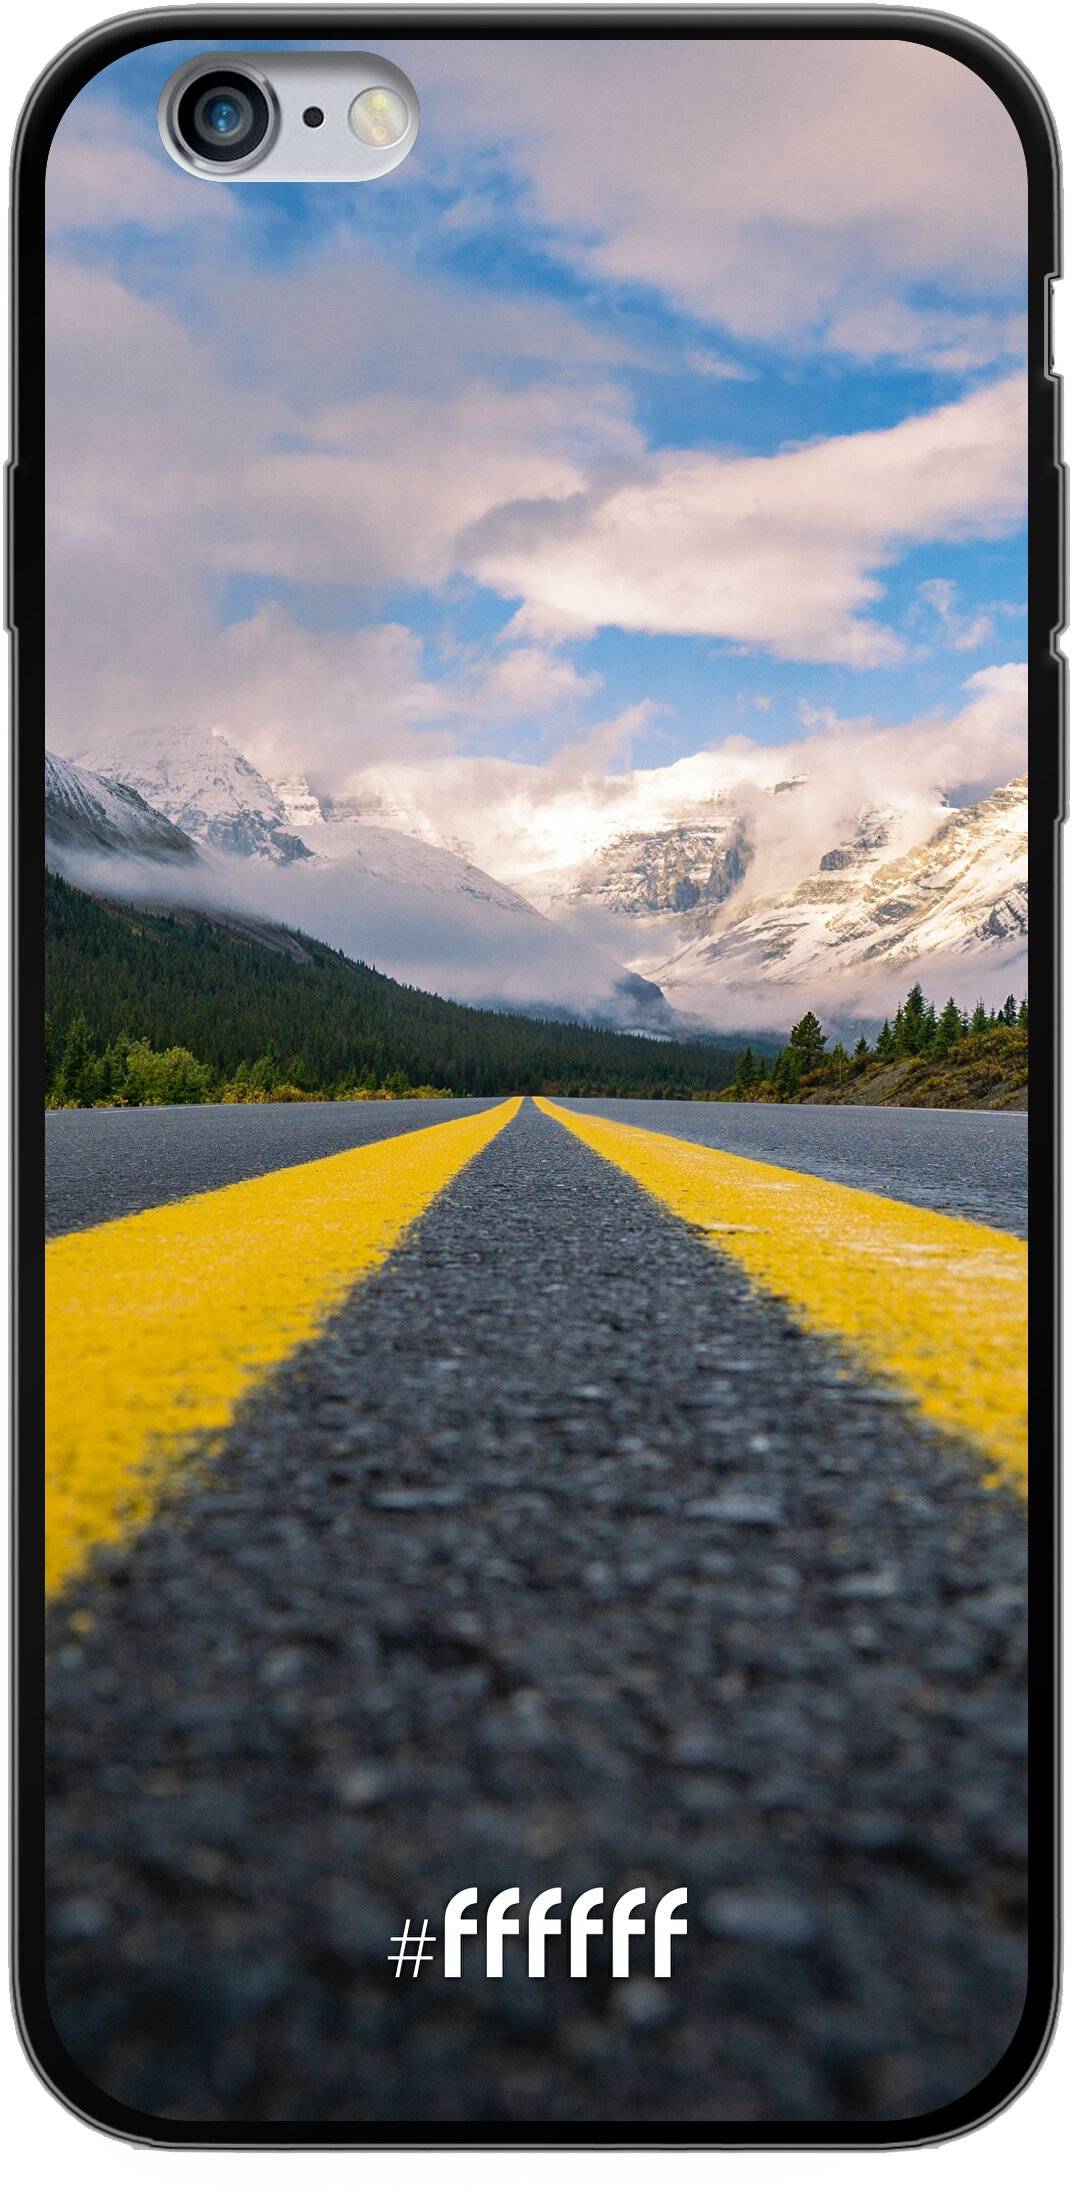 Road Ahead iPhone 6s